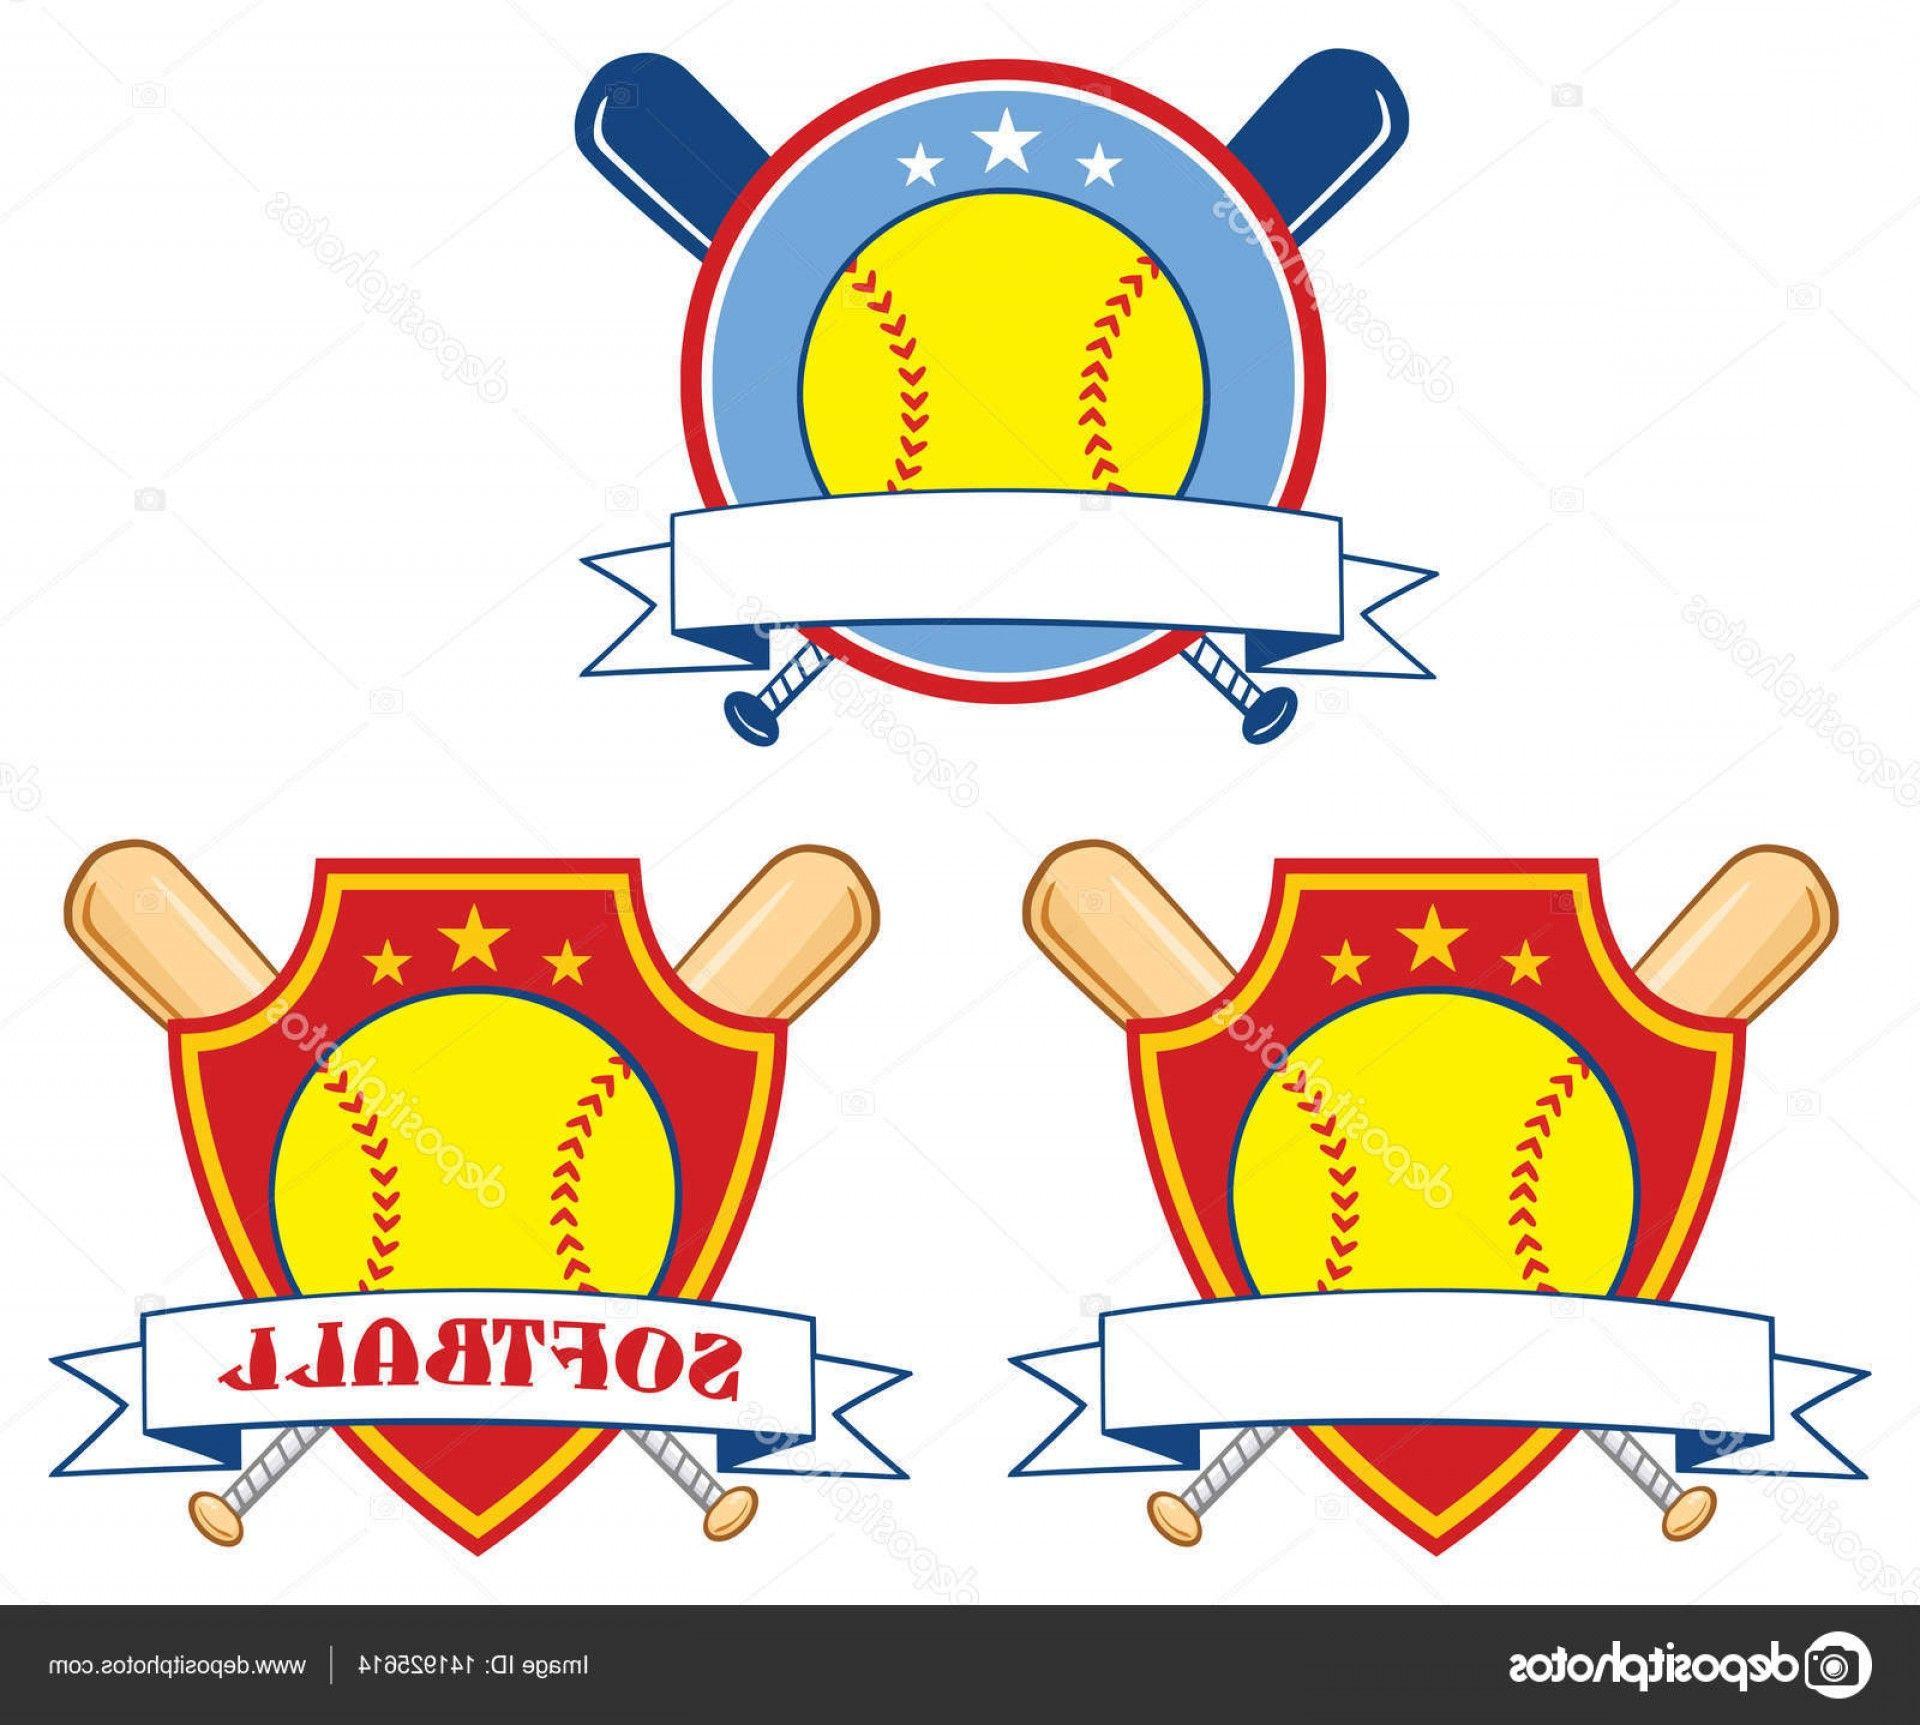 Crossed Bats and Softball Logo - Stock Illustration Yellow Softball Over Crossed Bats